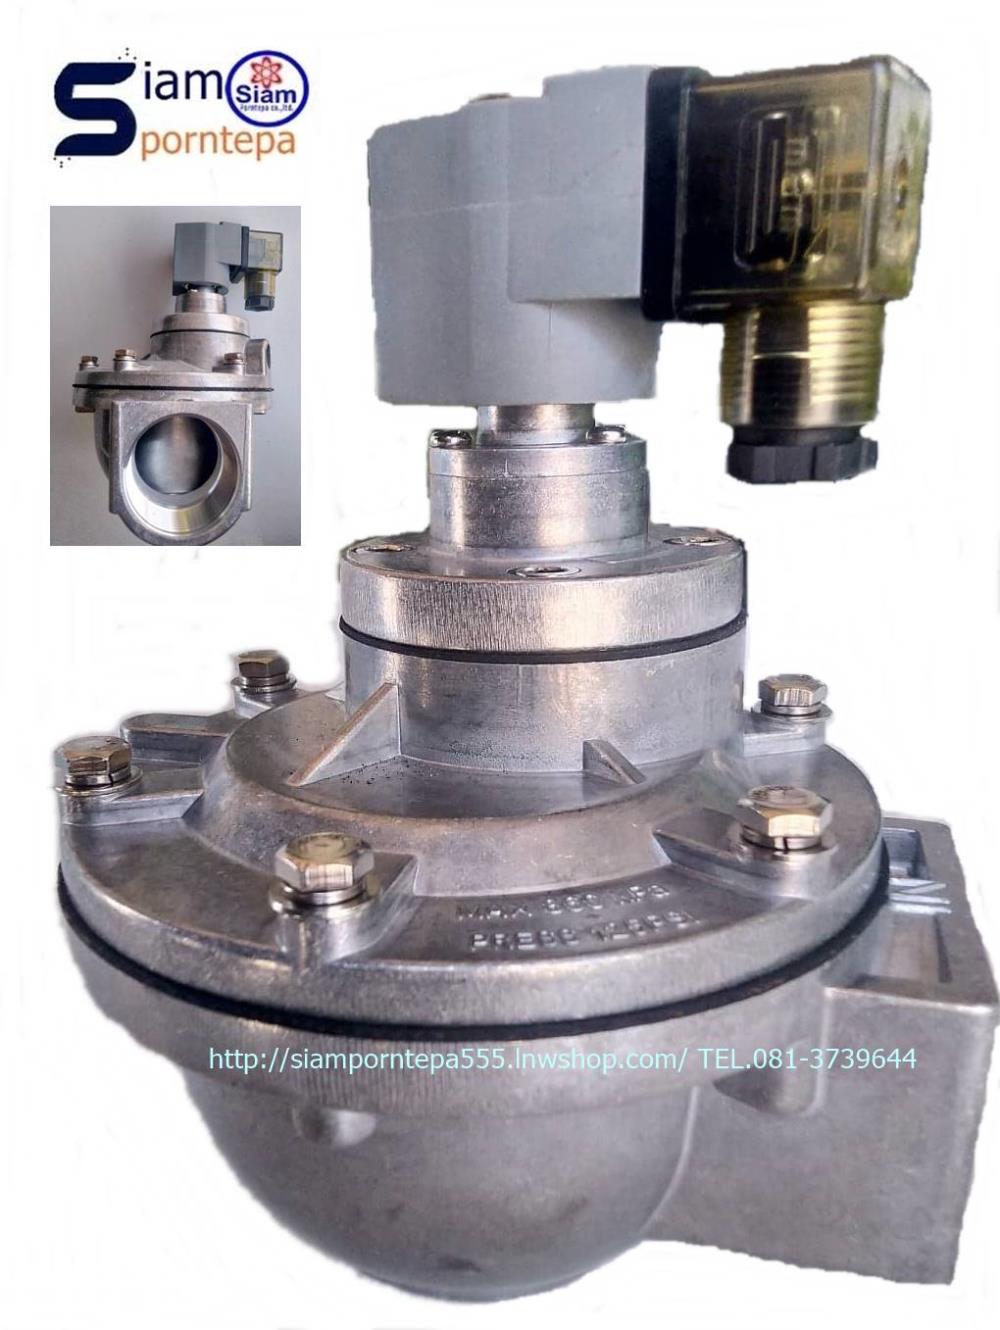 EMCF-50-220V Pulse valve size 2" วาล์วกระทุ้งฝุ่น วาล์วกระแทกฝุ่น ไฟ 220V Pressure 0-9 bar ราคาถูก ใต้หวัน ส่งฟรีทั่วประเทศ,EMCF-50-220V Pulse valve size 2" วาล์วกระทุ้งฝุ่น ใต้หวัน,วาล์วกระแทกฝุ่น ไฟ 220V Pressure 0-9 bar ราคาถูก ใต้หวัน,EMCF-50-220V Pulse valve size 2" วาล์วกระทุ้งฝุ่น,Pumps, Valves and Accessories/Valves/General Valves